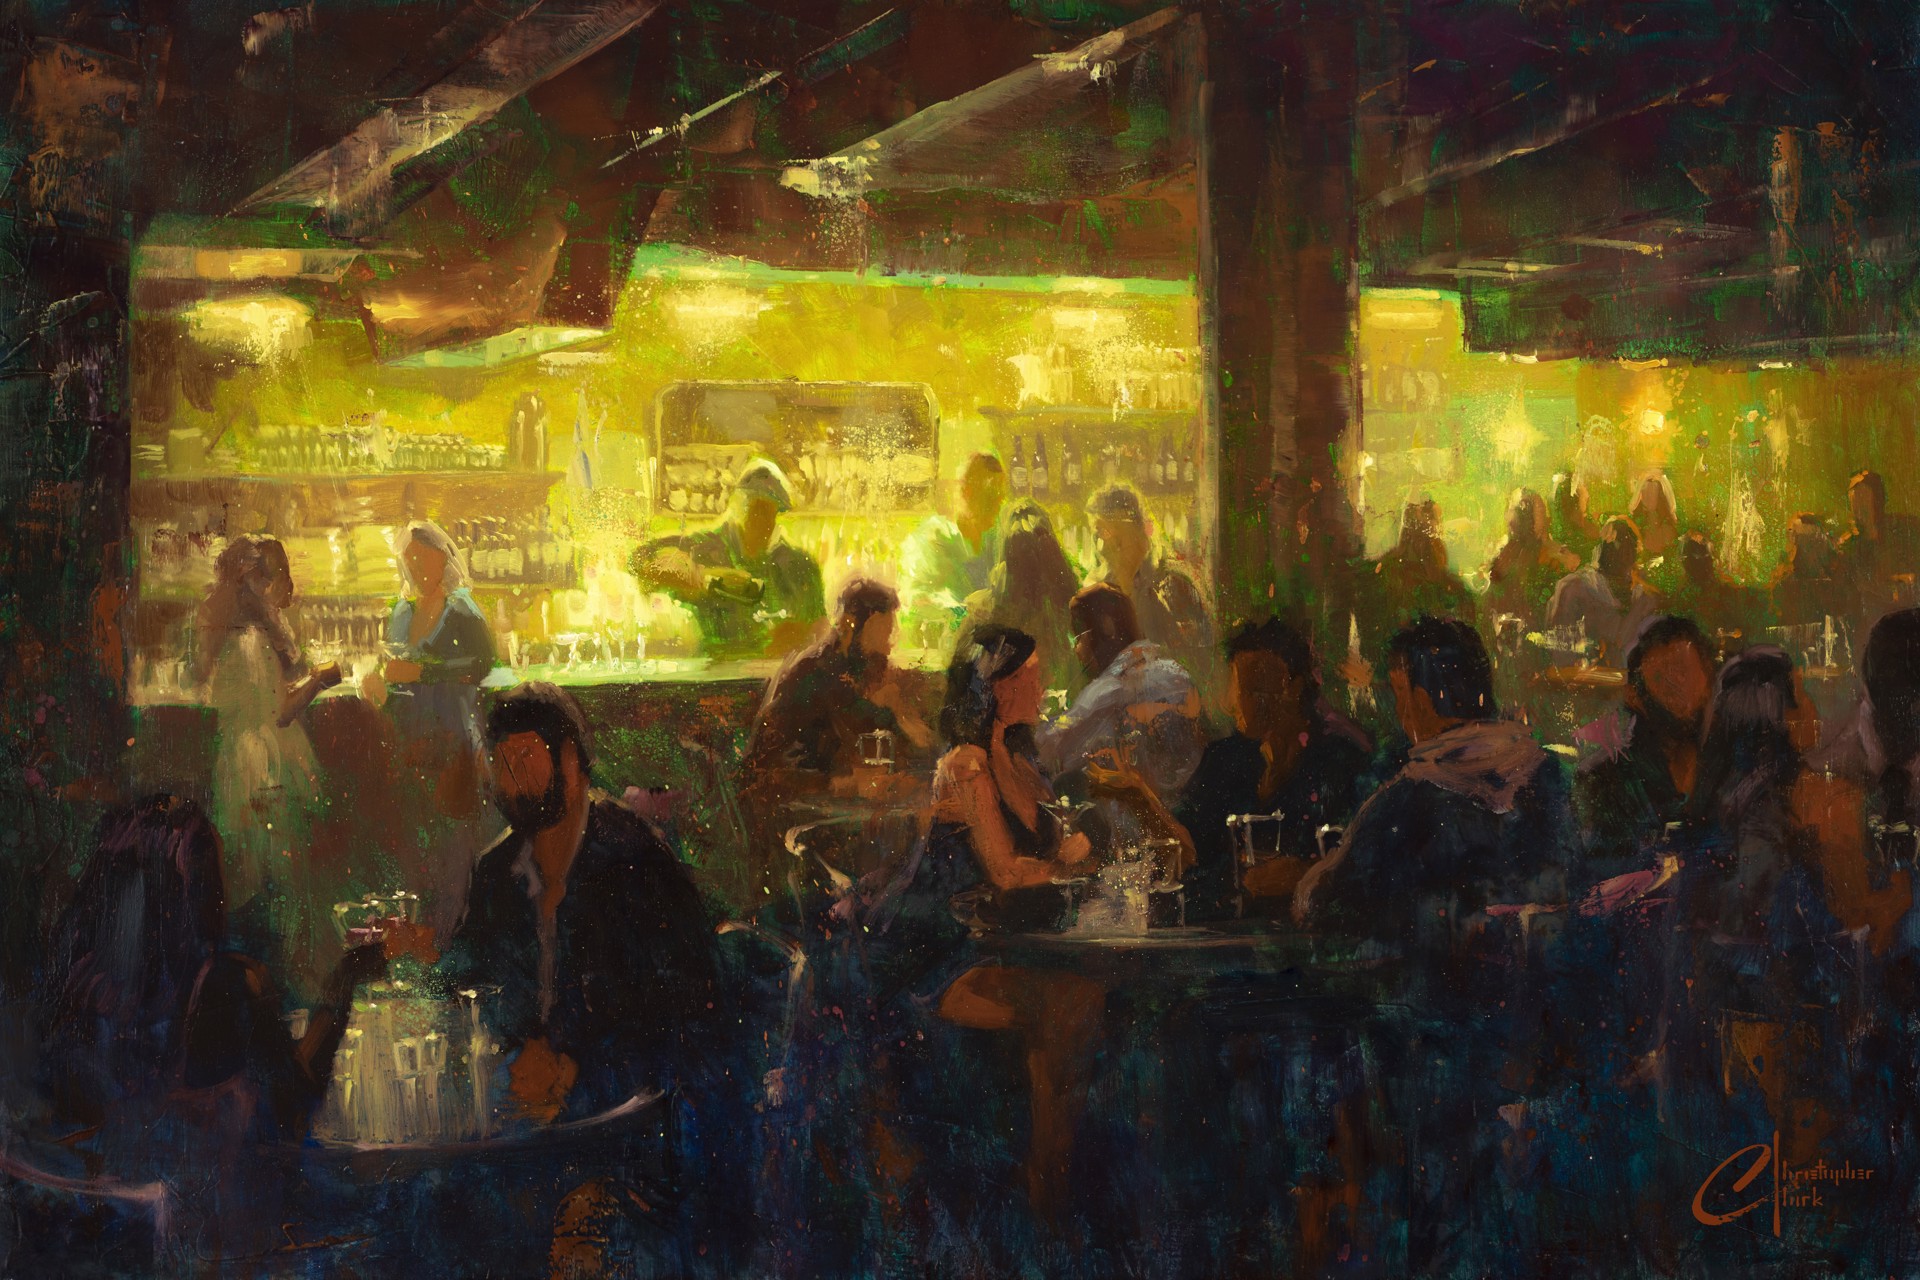 New York City, Bar 1 by Christopher Clark